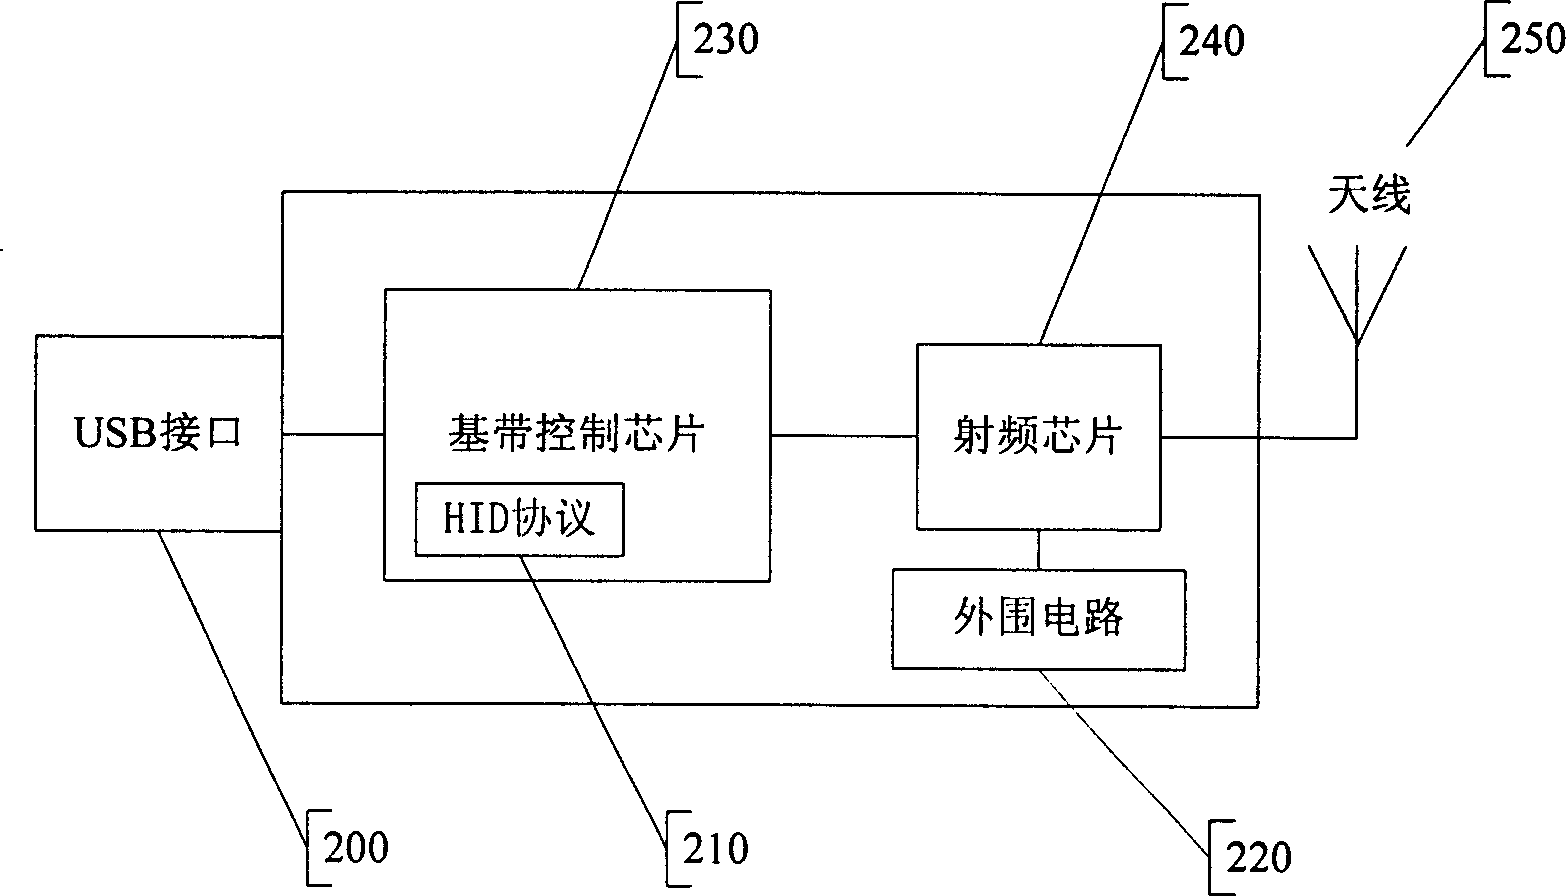 Method of making bluetooth USB adaptor having man-machine interaction function